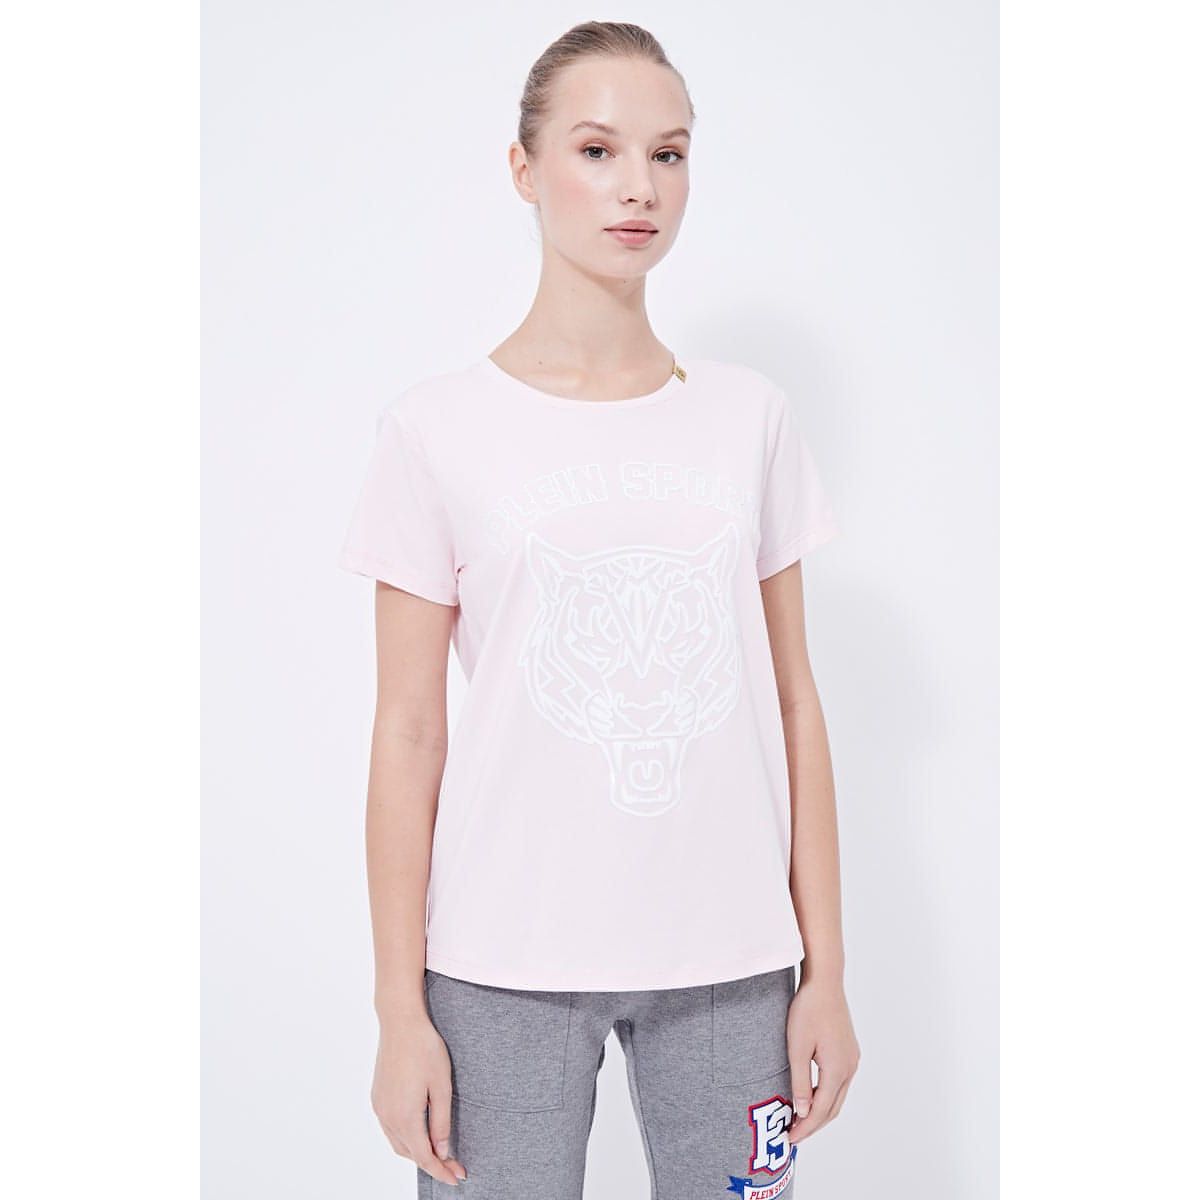 Plein Sport Women's Round Neck Short Sleeves Printed T-Shirt,Small, Pink - Brandat Outlet